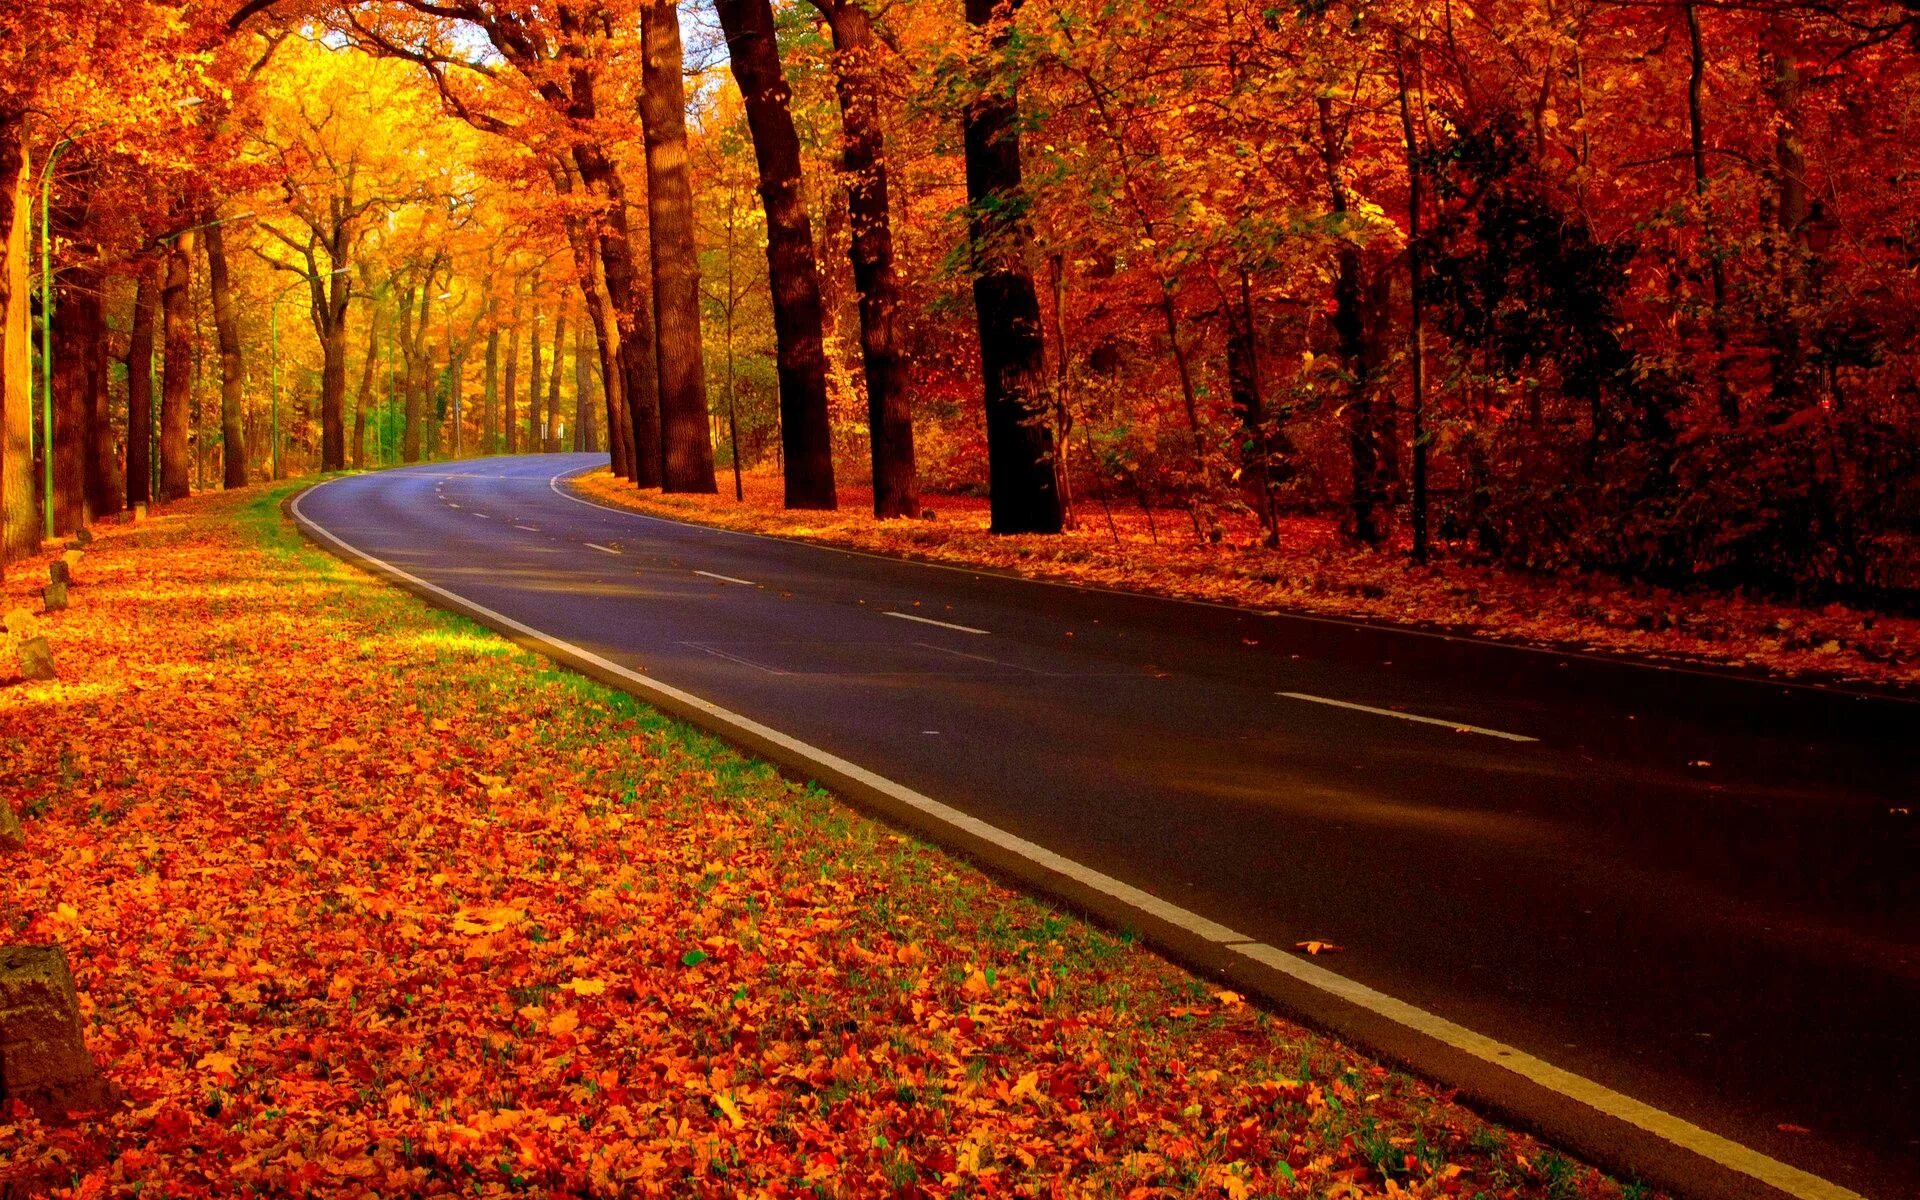 The trees fall across the road. Осенняя дорога. Дорога в осень. Осенняя дорога в лесу. Осенние обои.